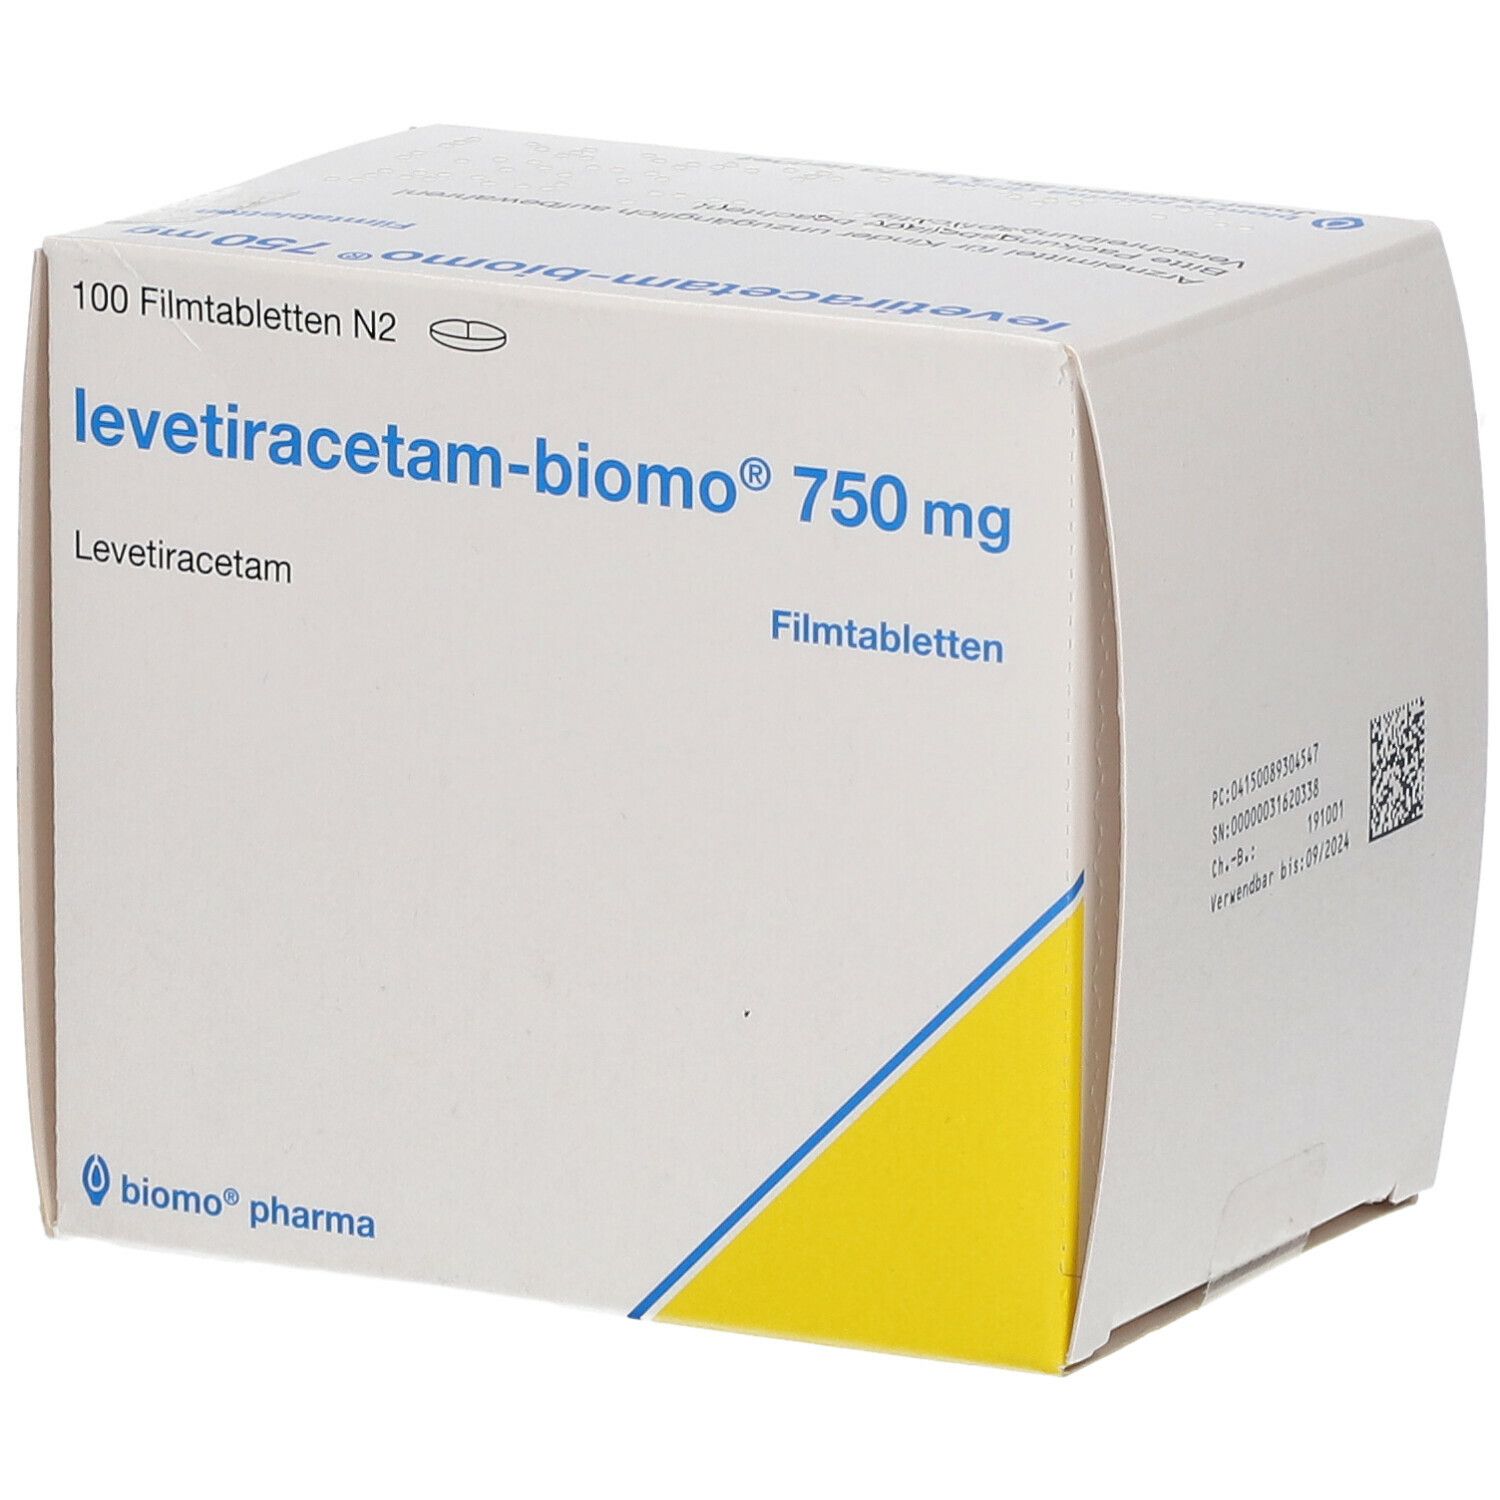 levetiracetam-biomo® 750 mg